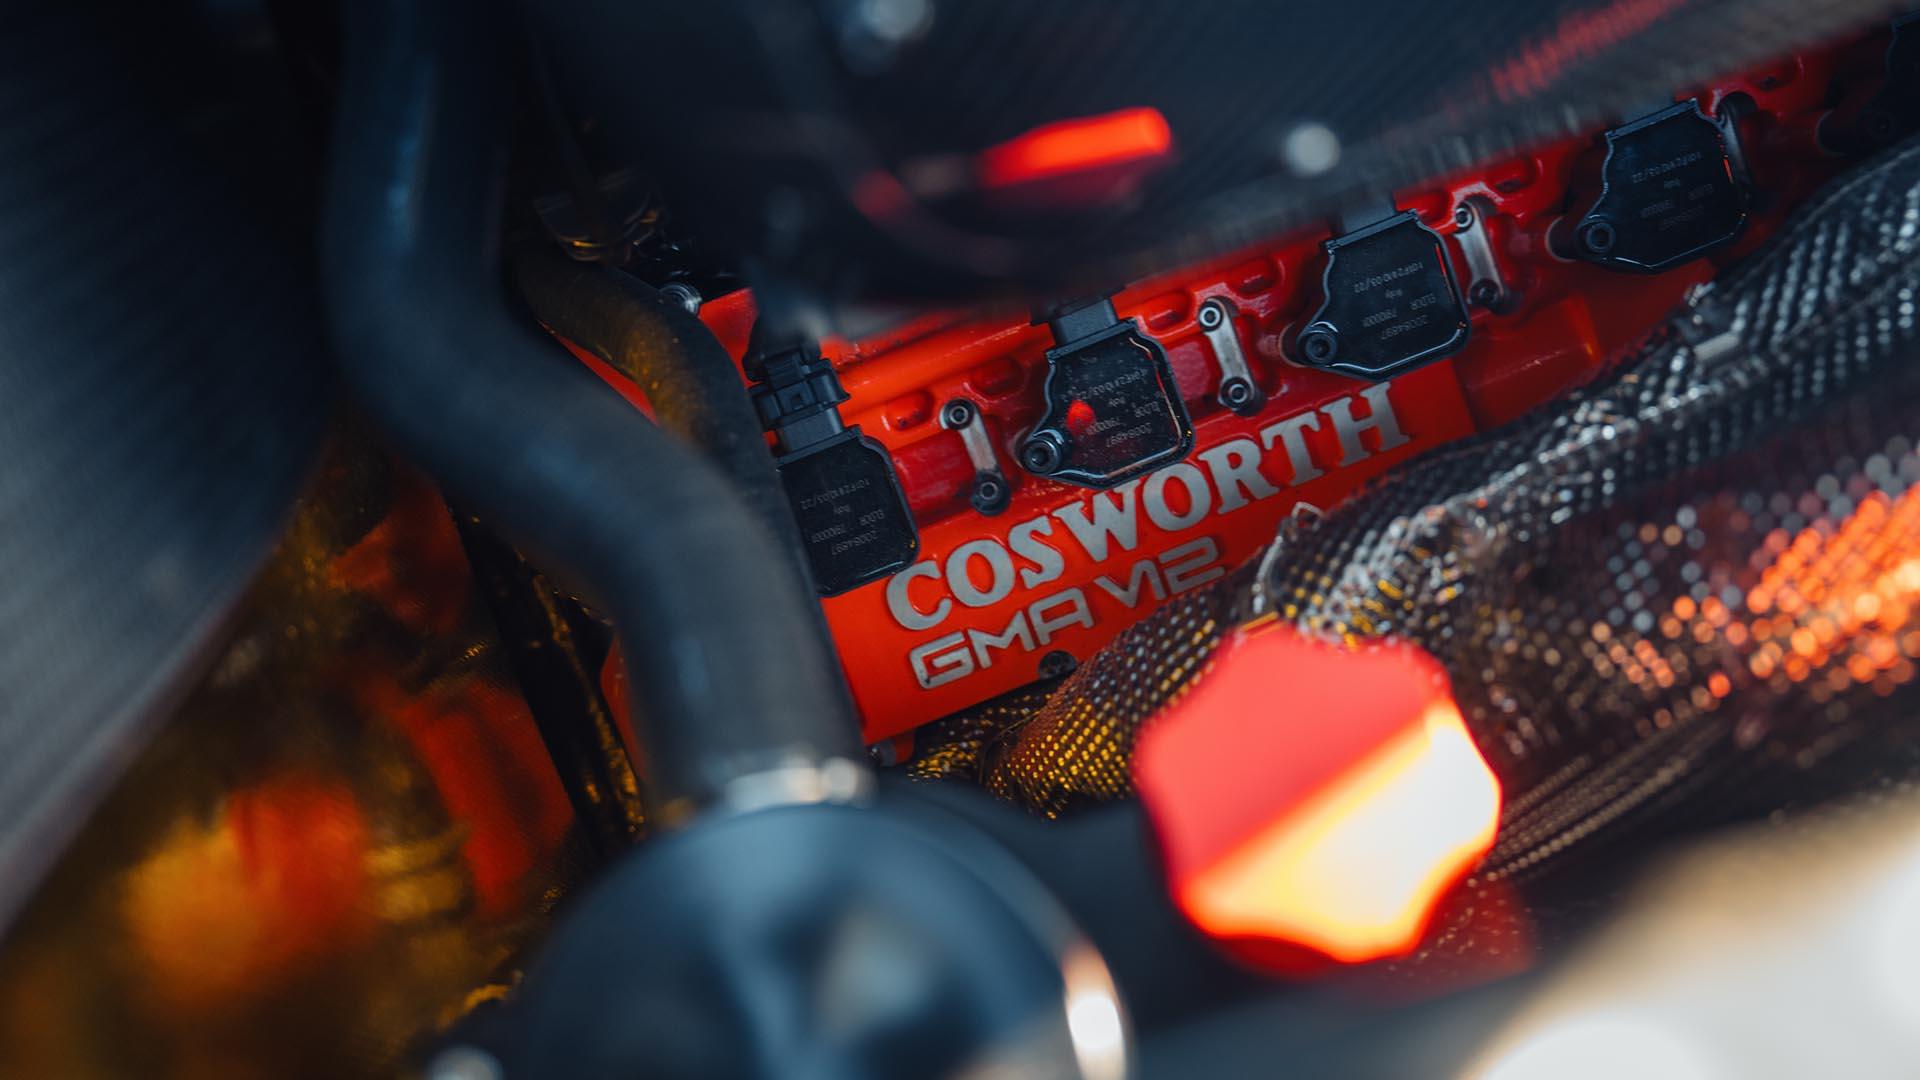 GMA T.50 Cosworth motor